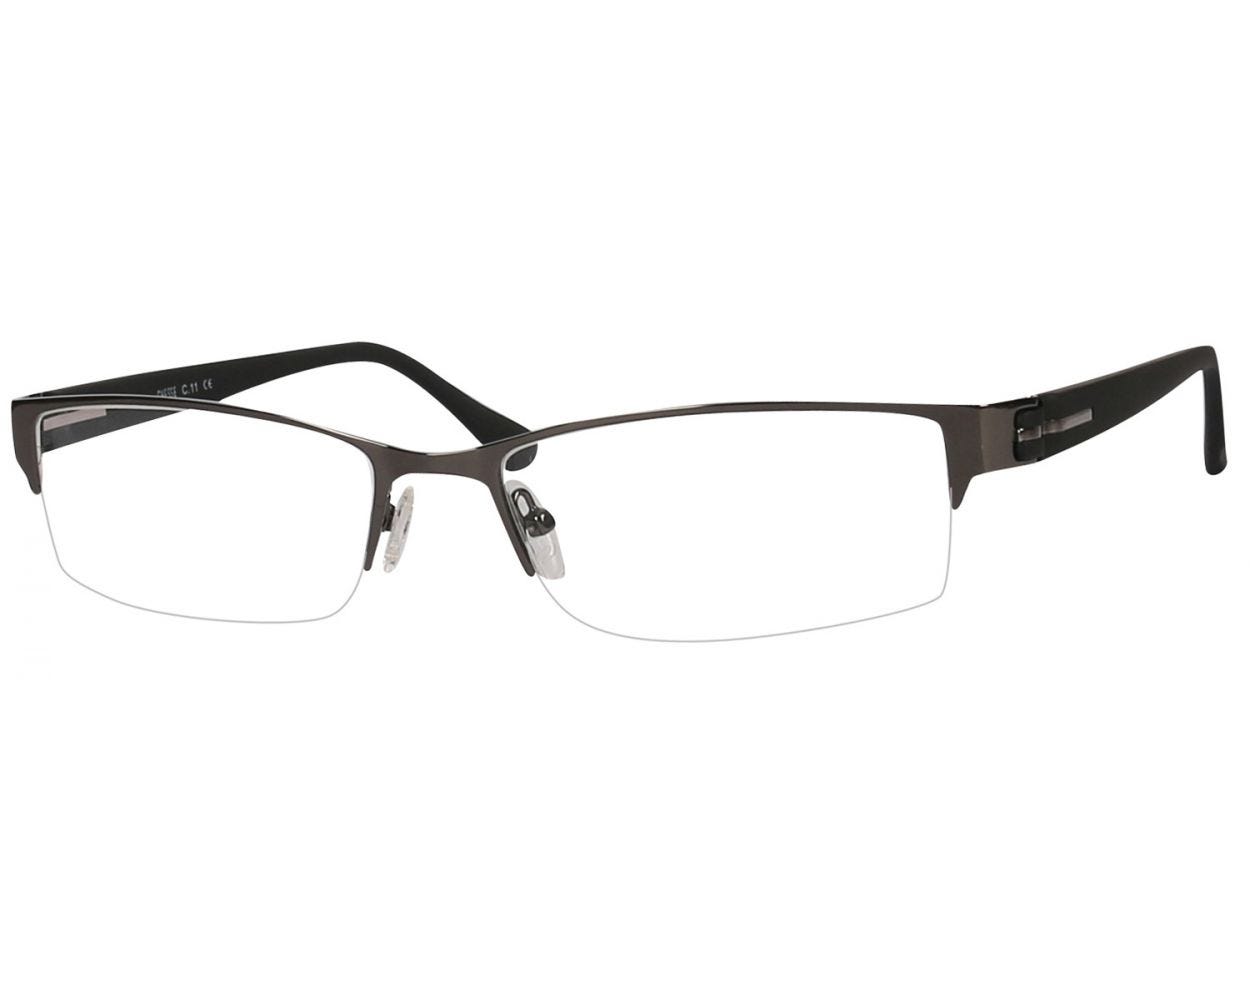 G4U G507 Rectangle Eyeglasses 118483-c